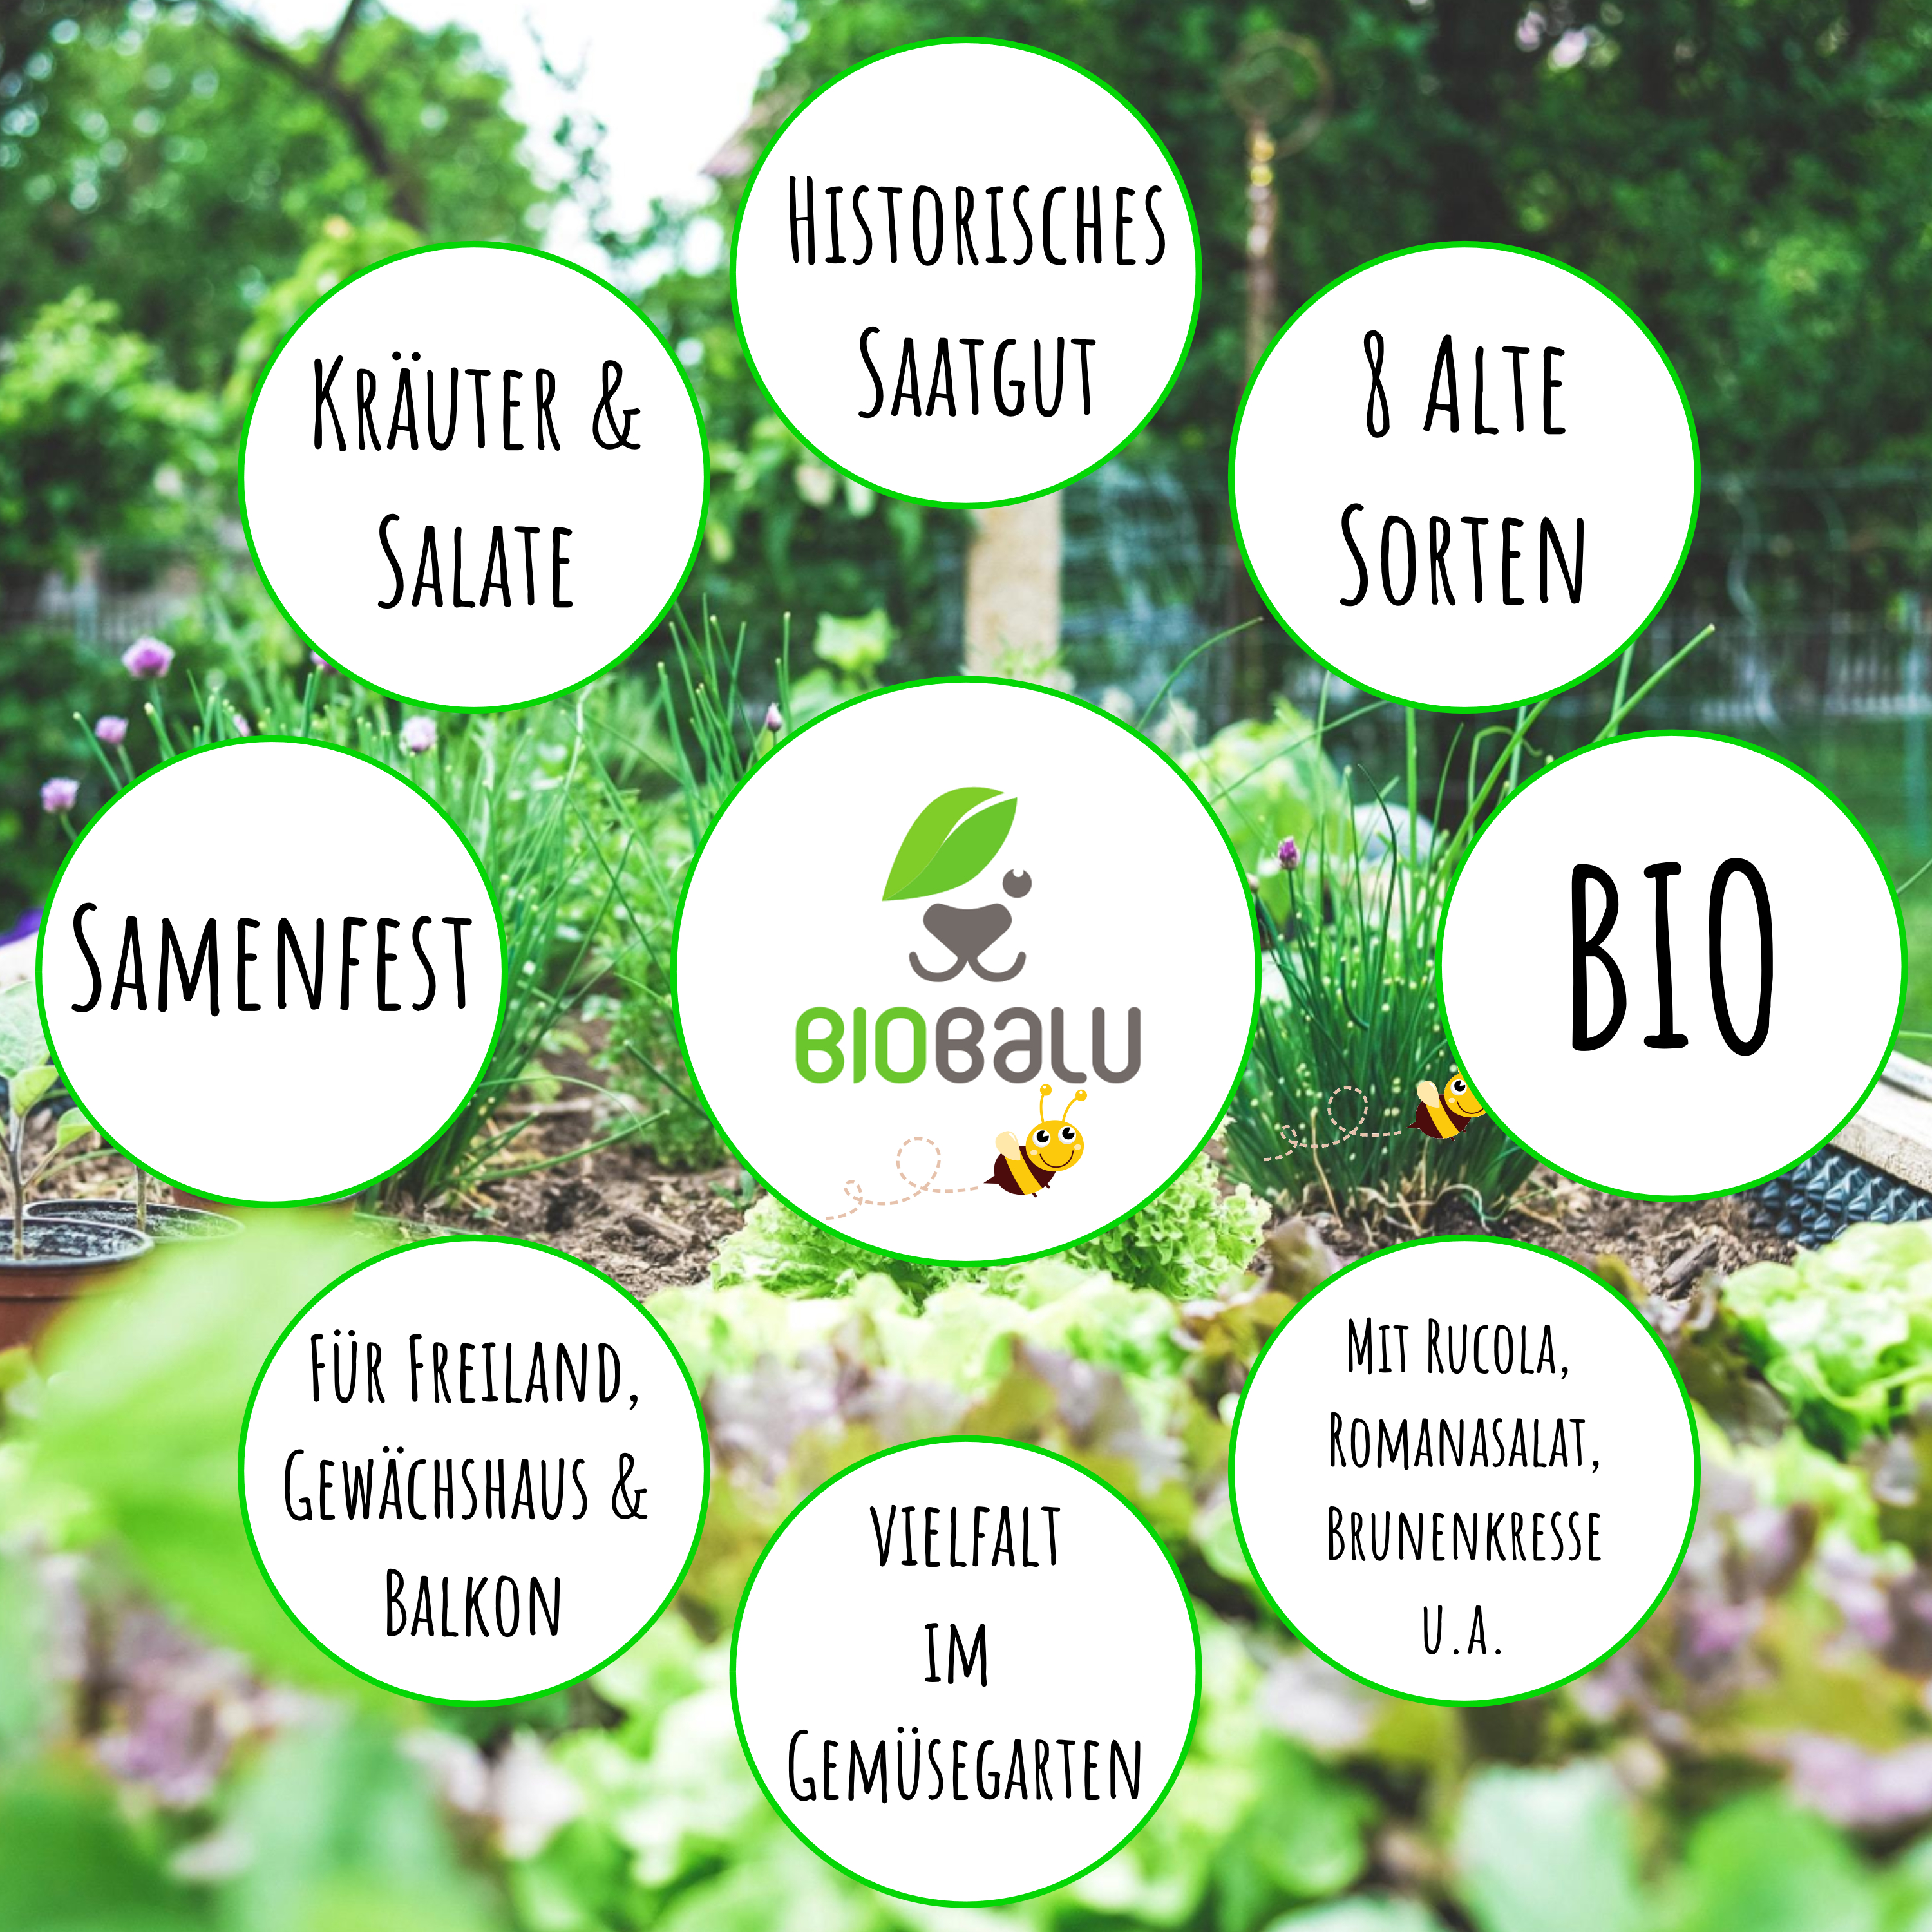 Biobalu Kräuter & Salat, 8 Alte Sorten, Historisches Saatgut Set